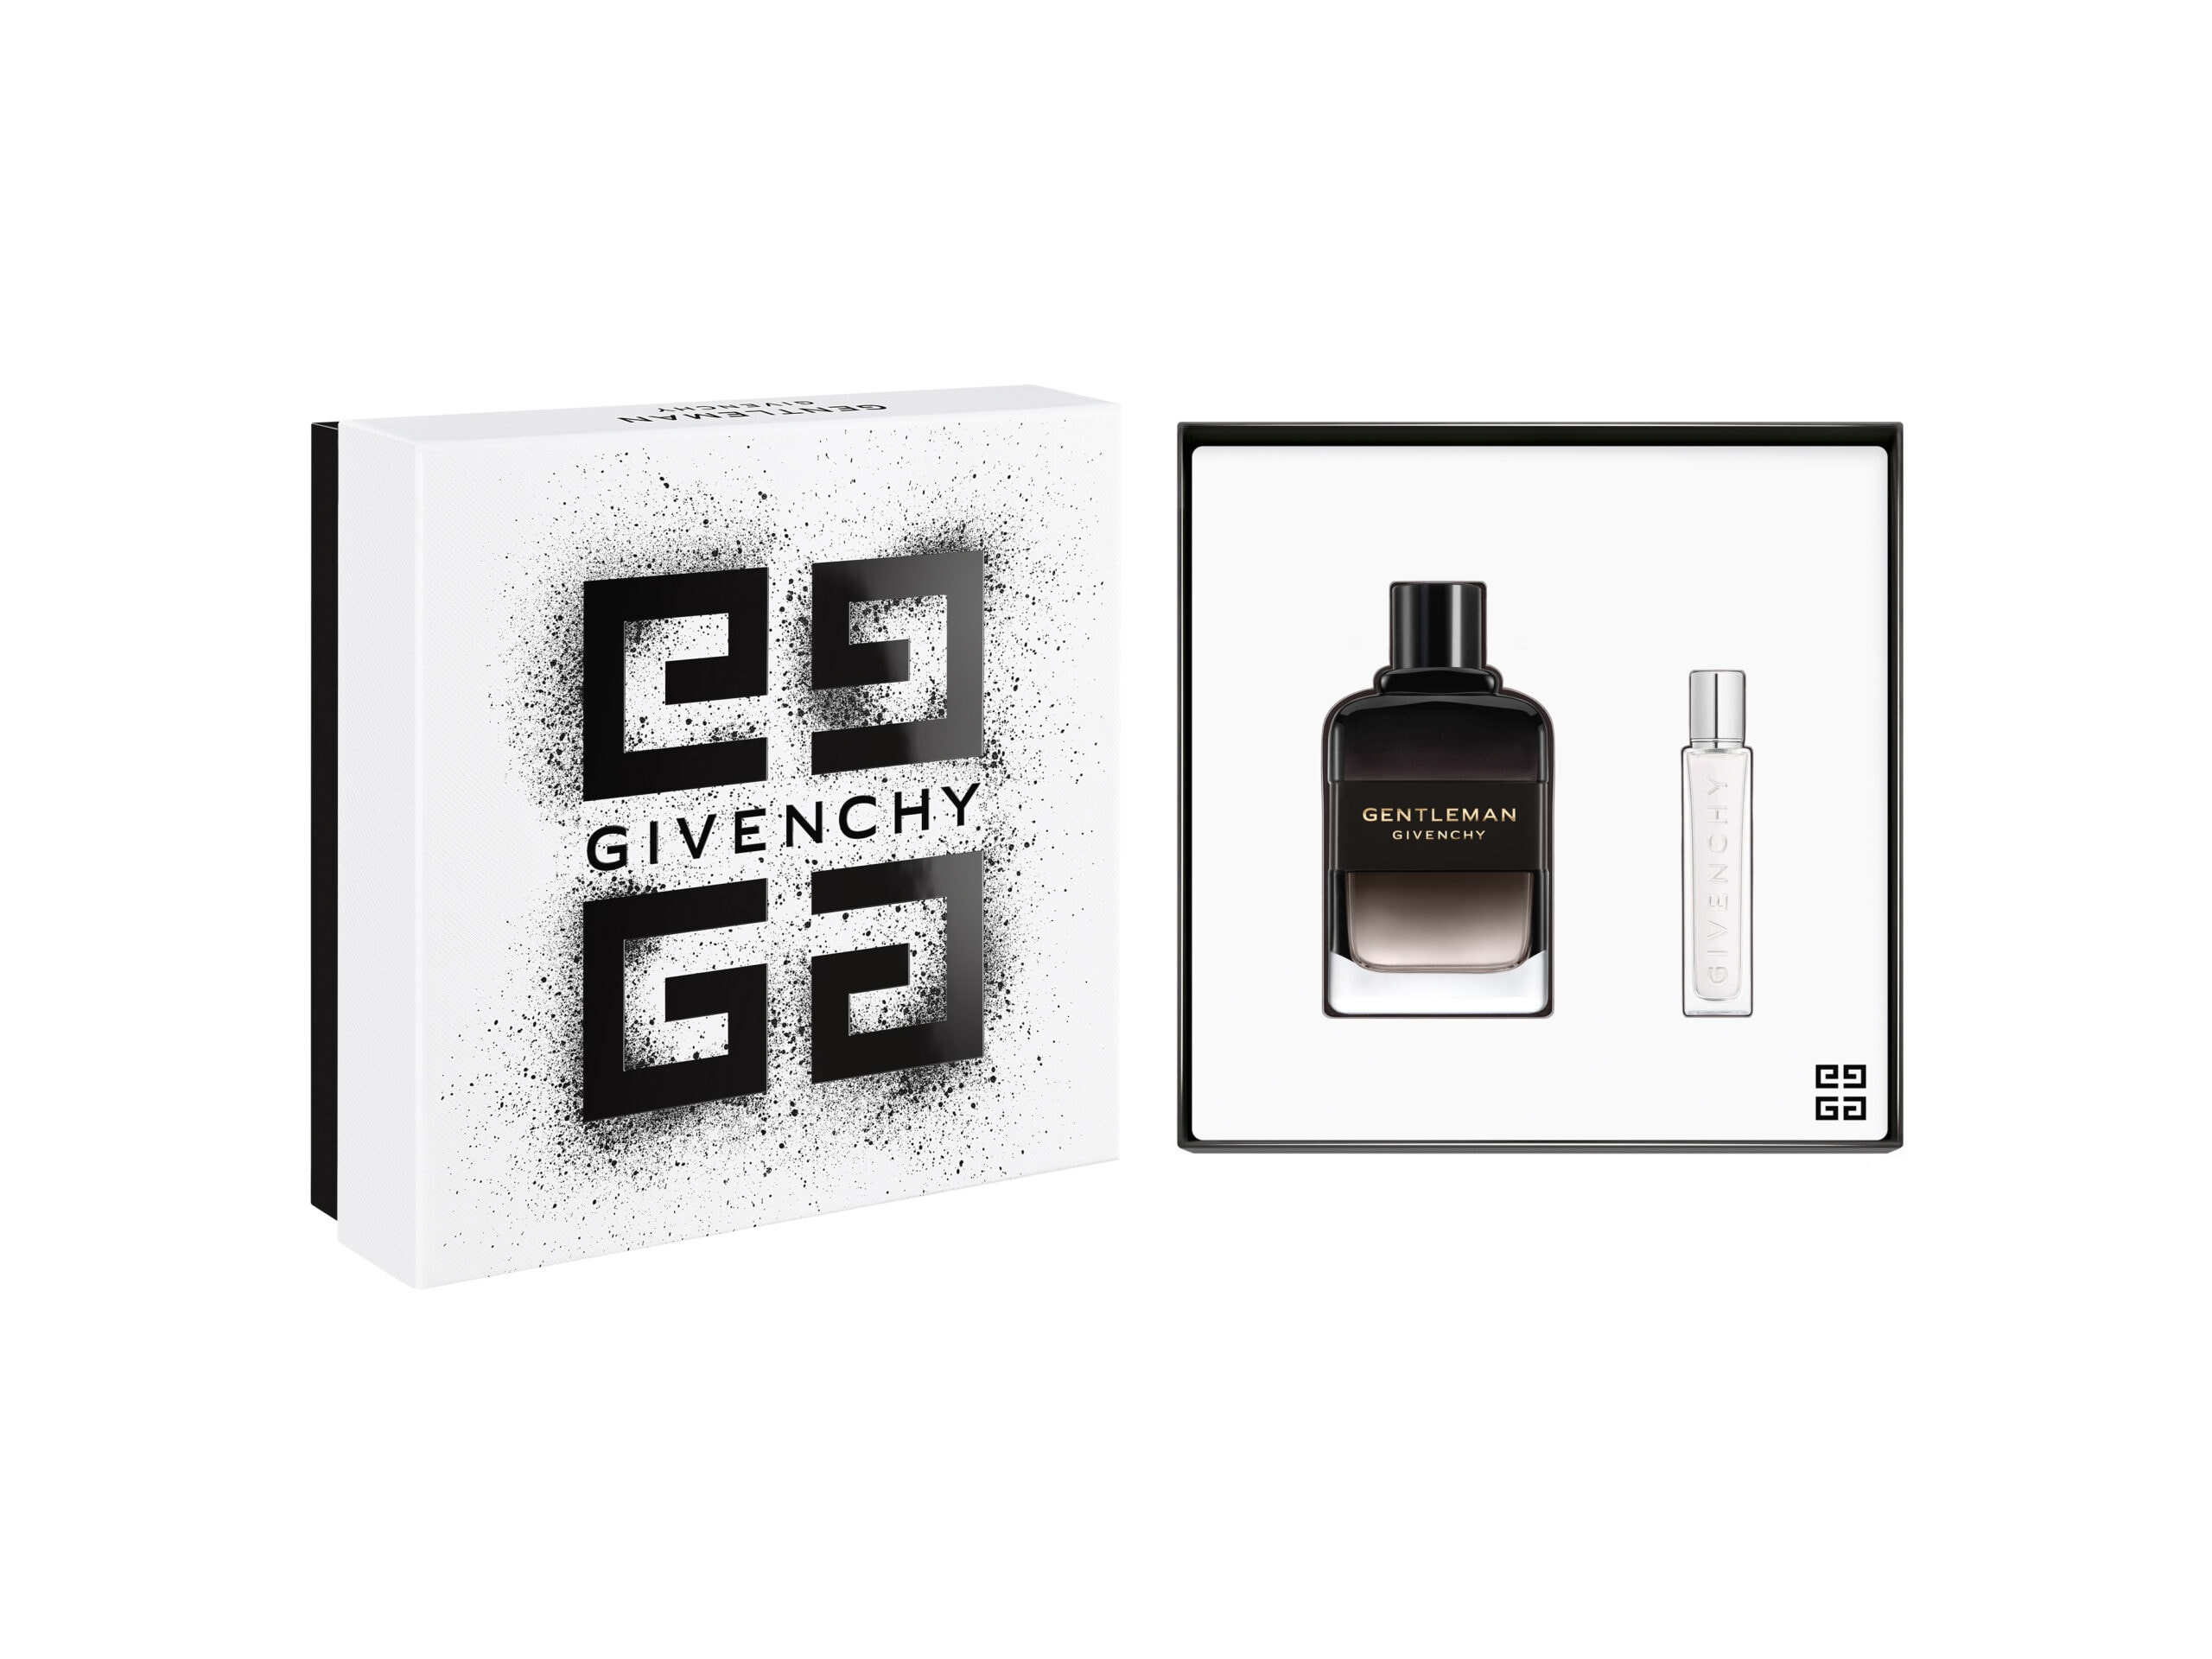 Gentleman Givenchy Boisee XMAS Gift Set 6